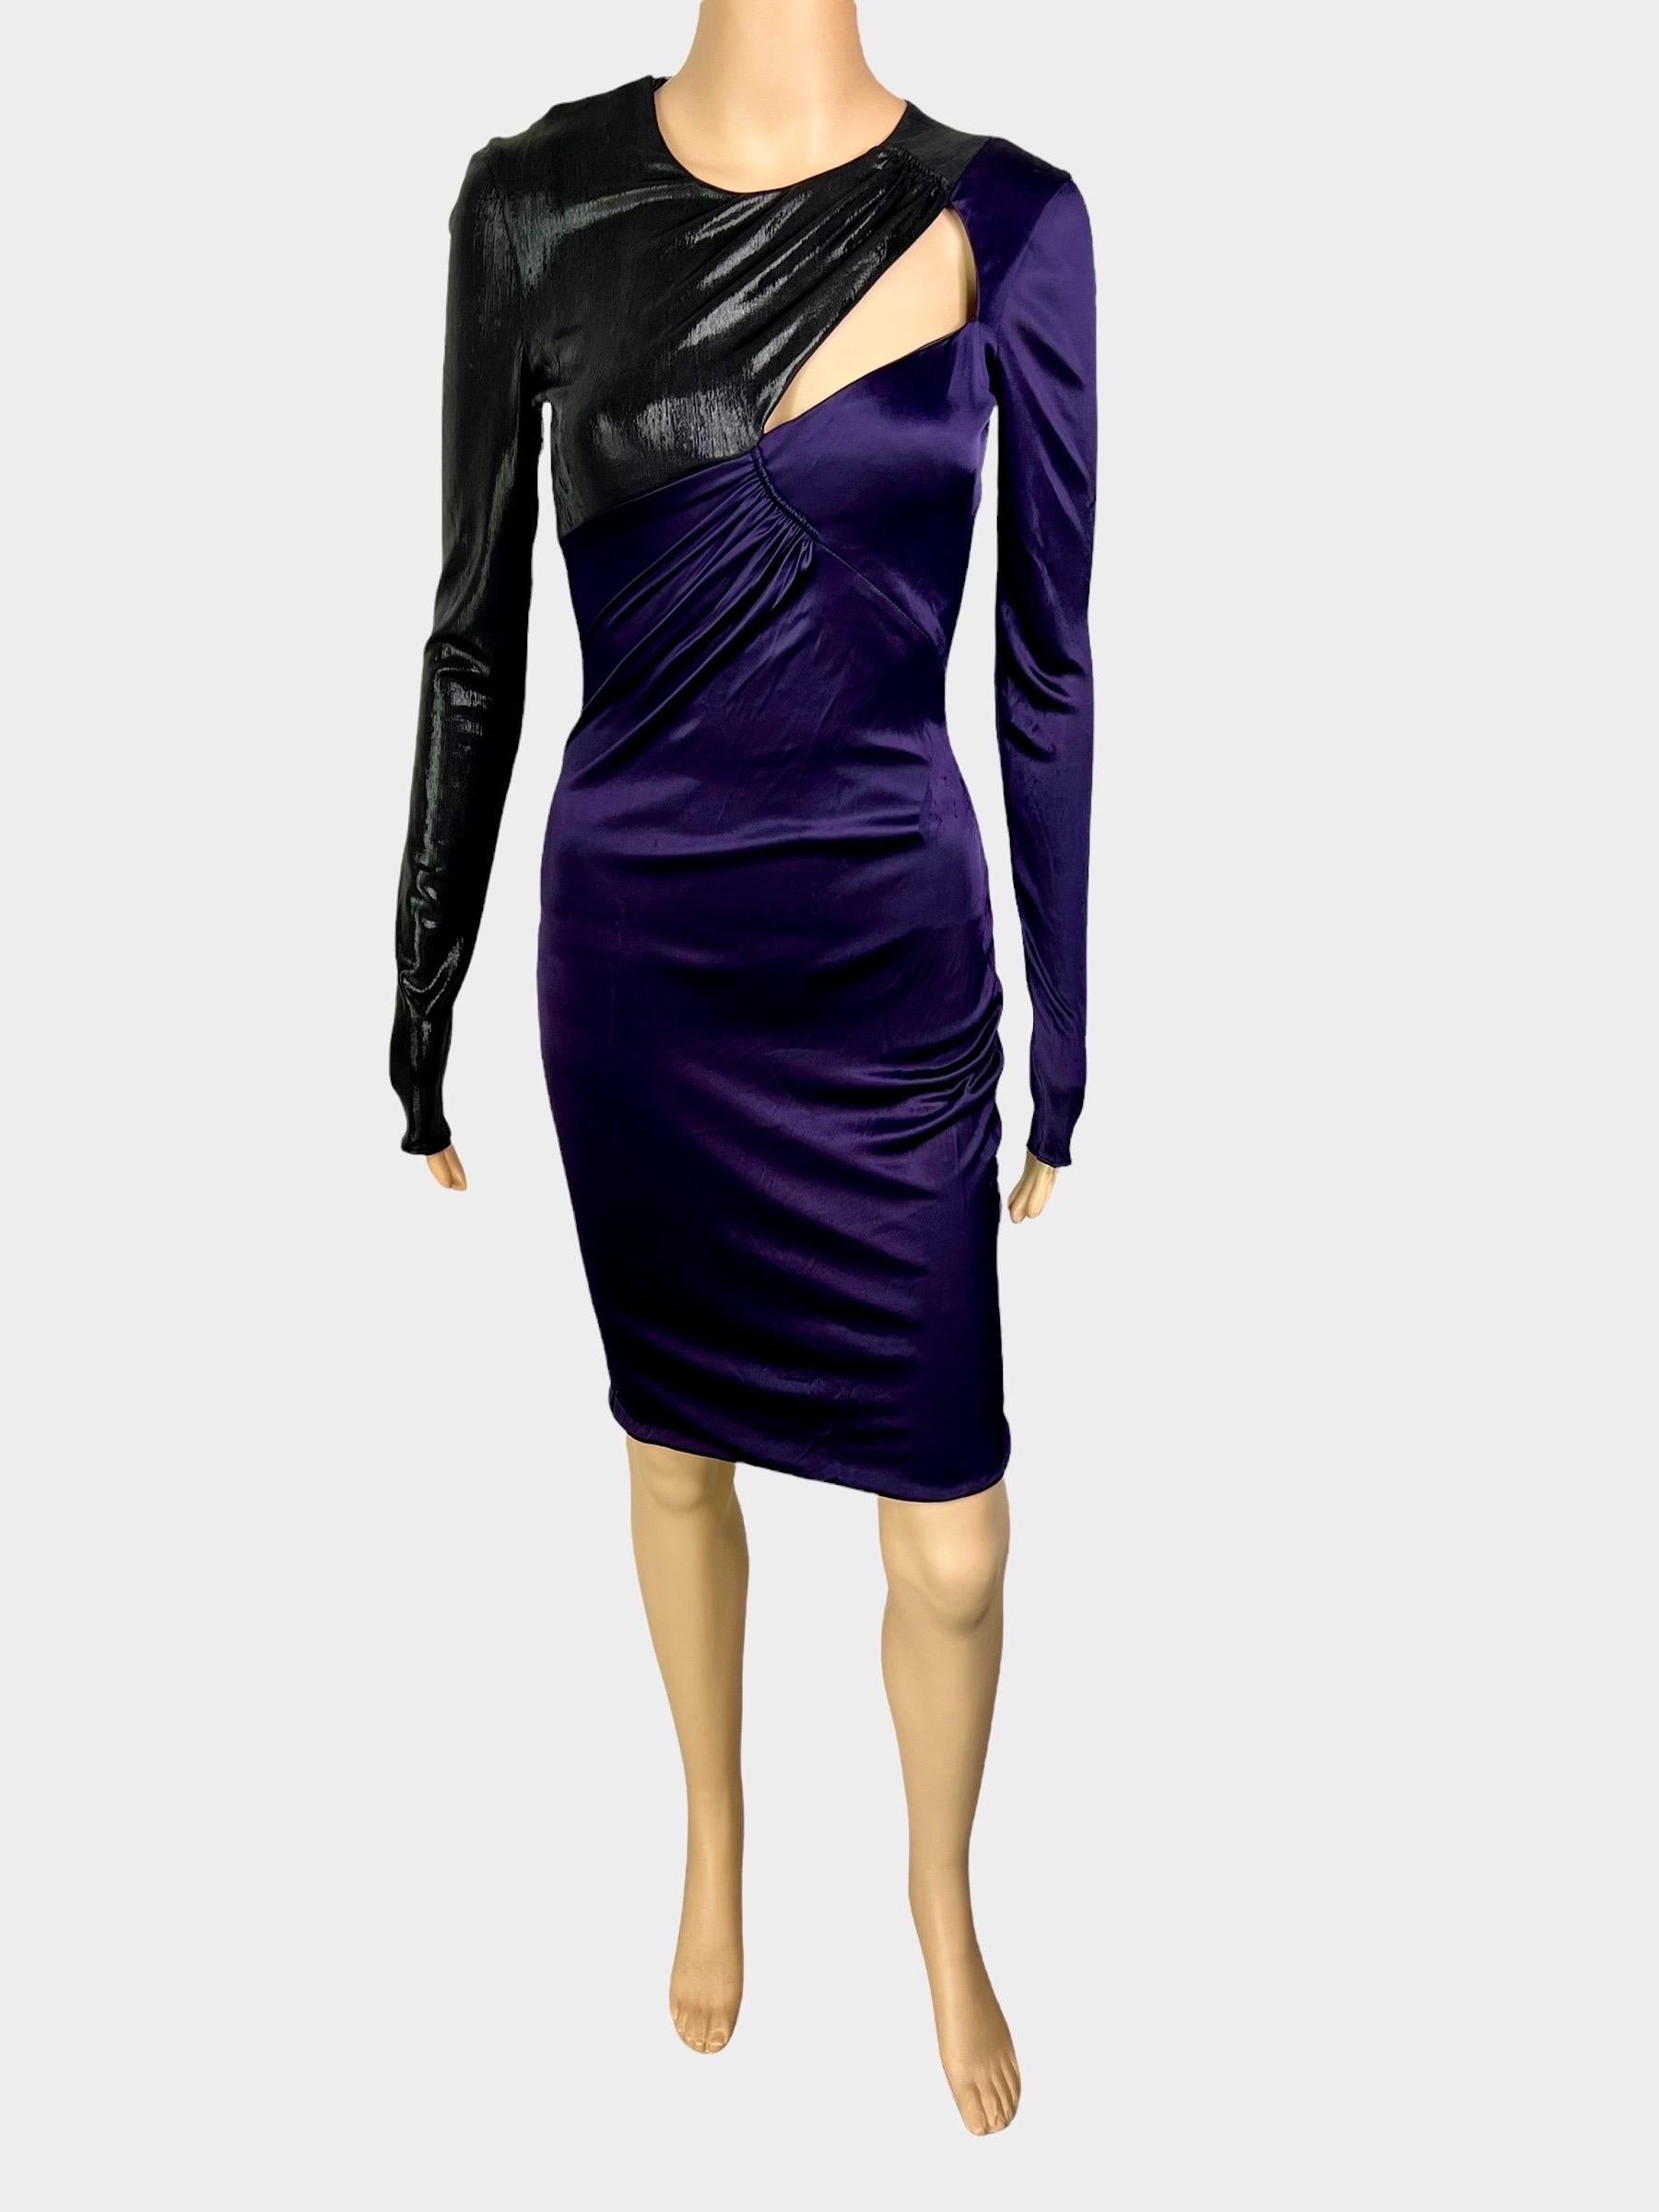 Versace F/W 2013 Wet Liquid Look Bodycon Cutout Color Block Dress For Sale 3